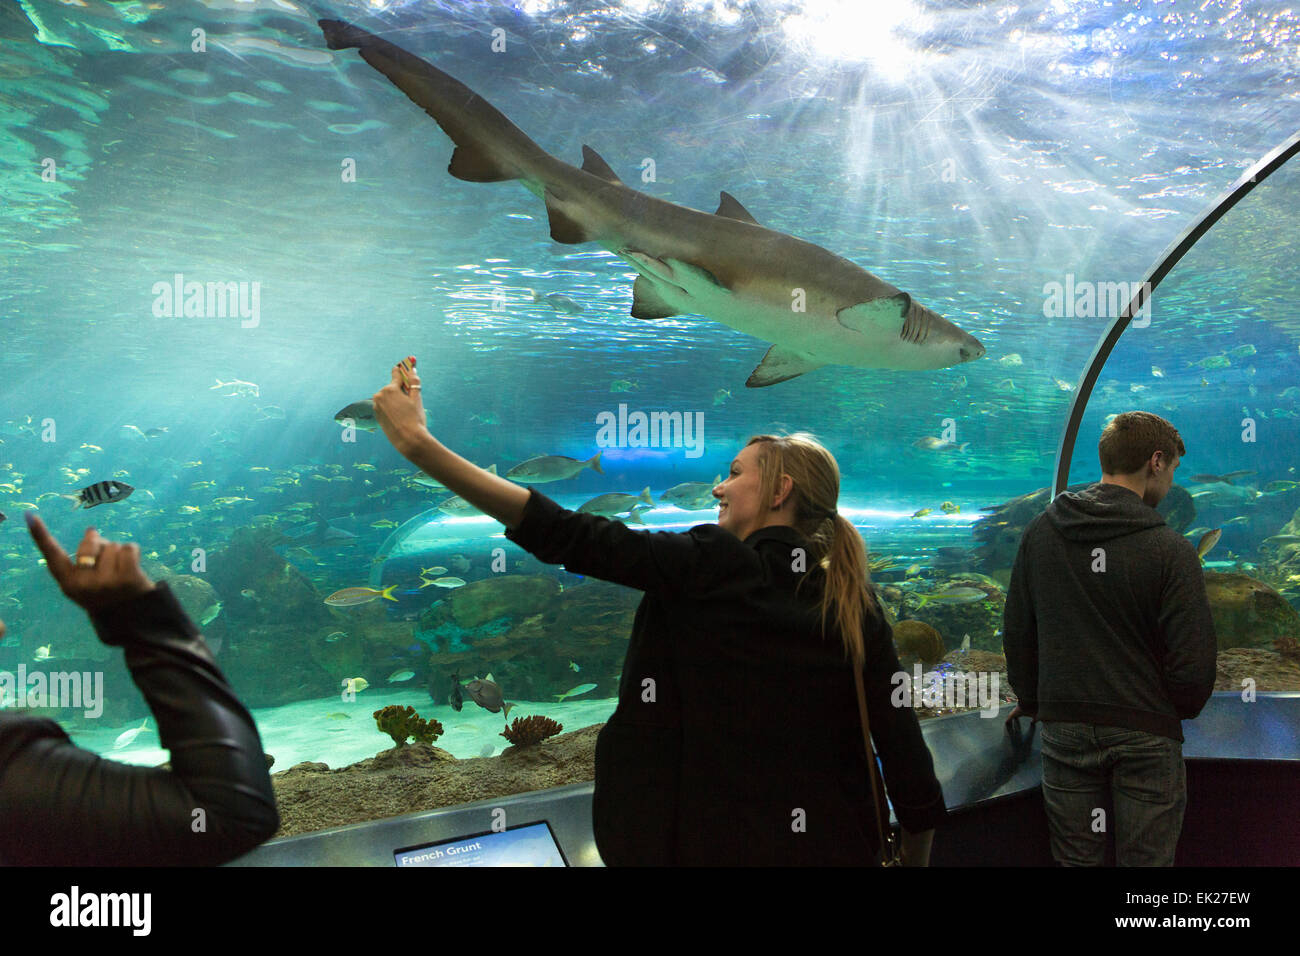 Canada, Ontario, Toronto, Ripley's Aquarium of Canada, femme prenant un selfie avec un requin nageant au-dessus de la tête Banque D'Images